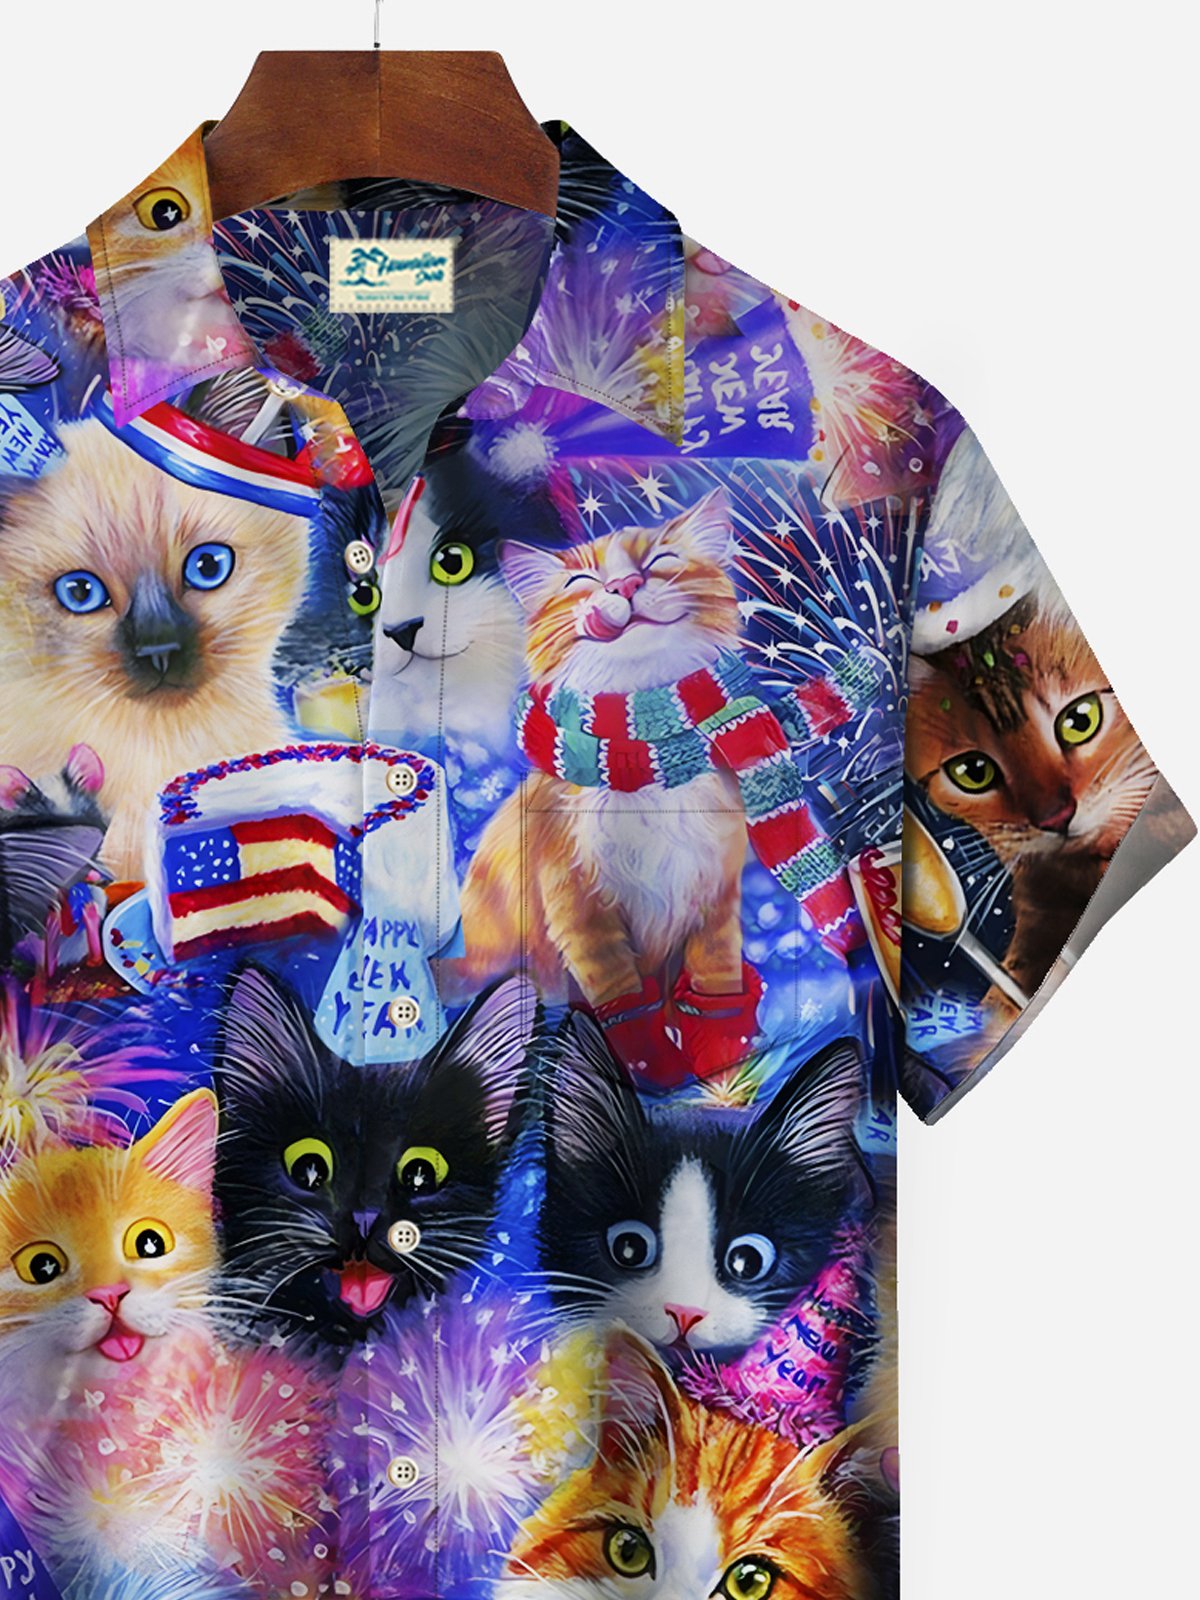 Royaura New Year Fireworks Men's Hawaiian Shirts Cute Cat Cartoon Stretch Easy Care Camp Pocket Shirts Big Tall